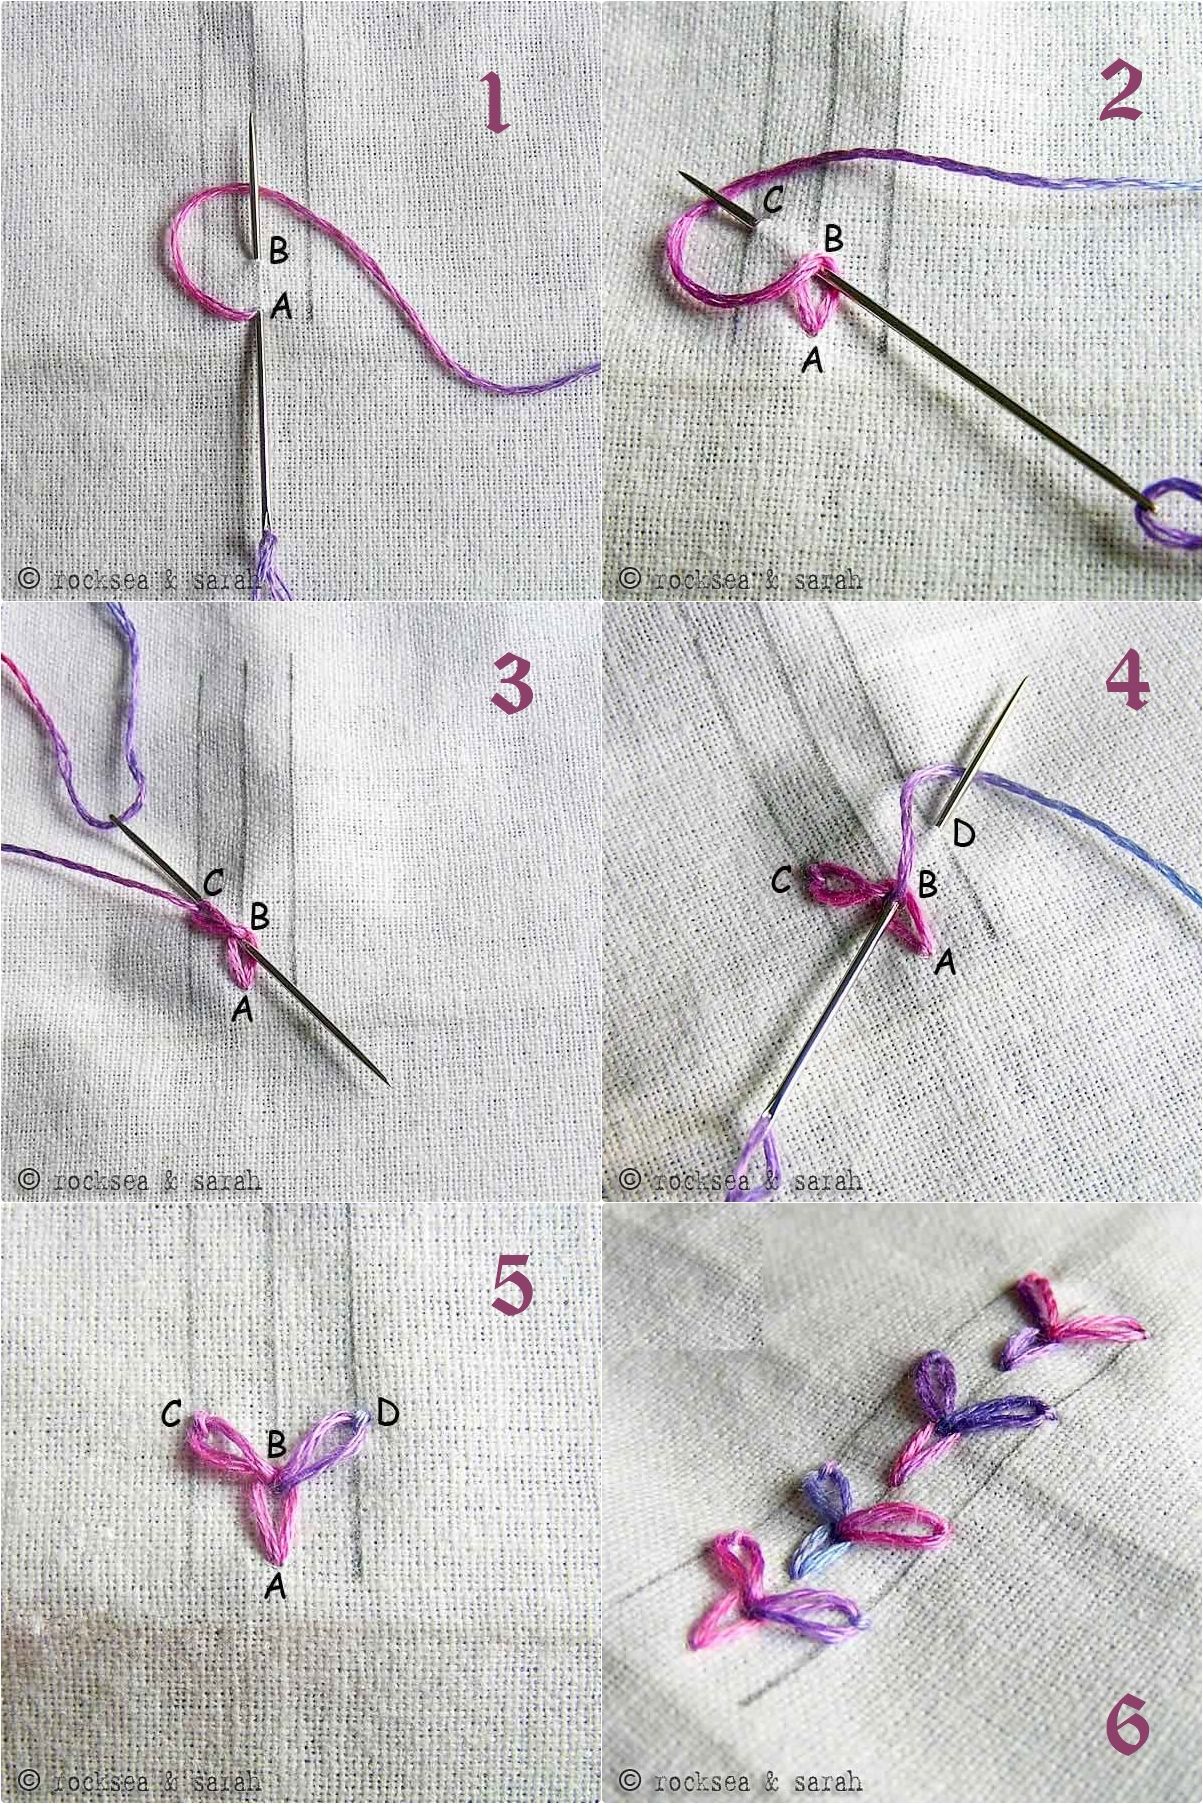 embroidery stitches tutorial pdf